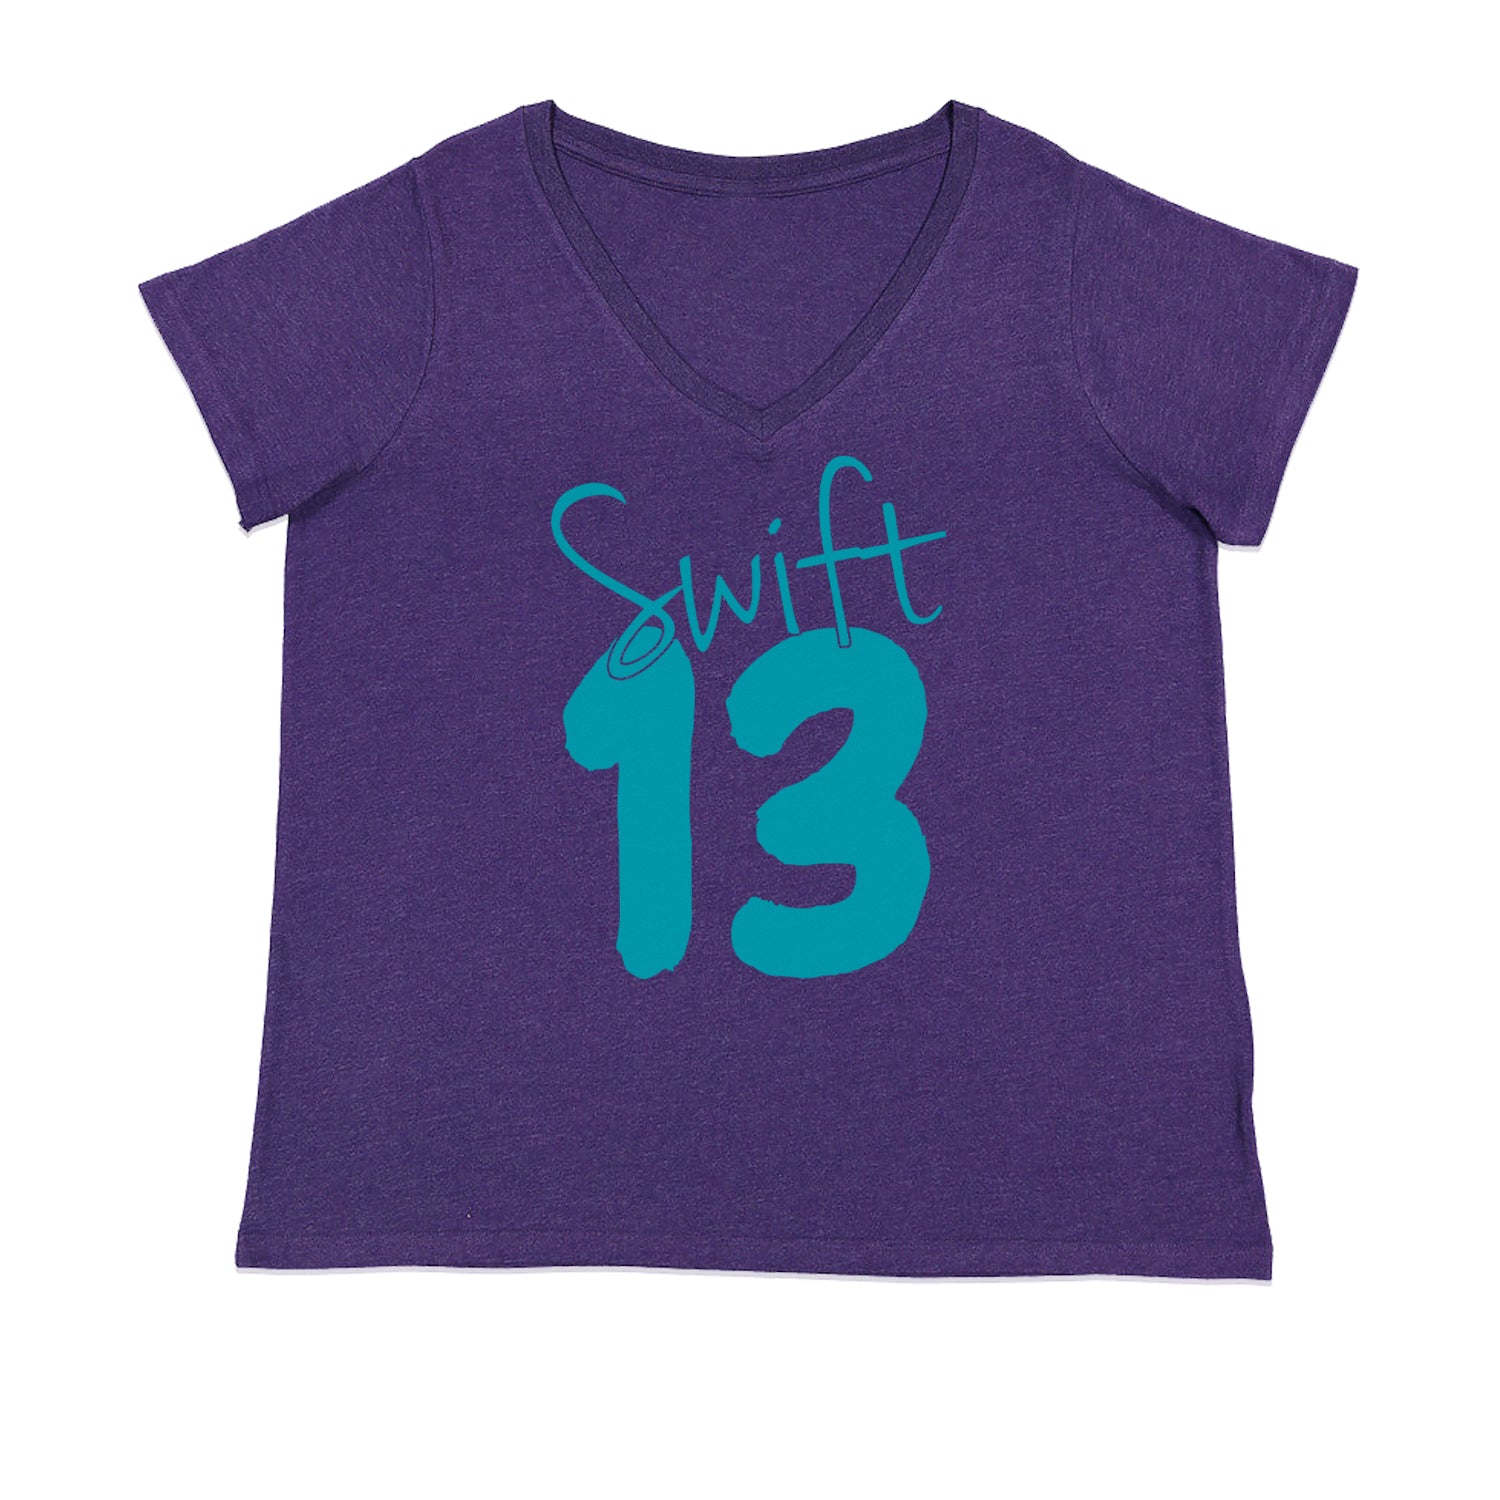 13 Swift 13 Lucky Number Era Womens Plus Size V-Neck T-shirt